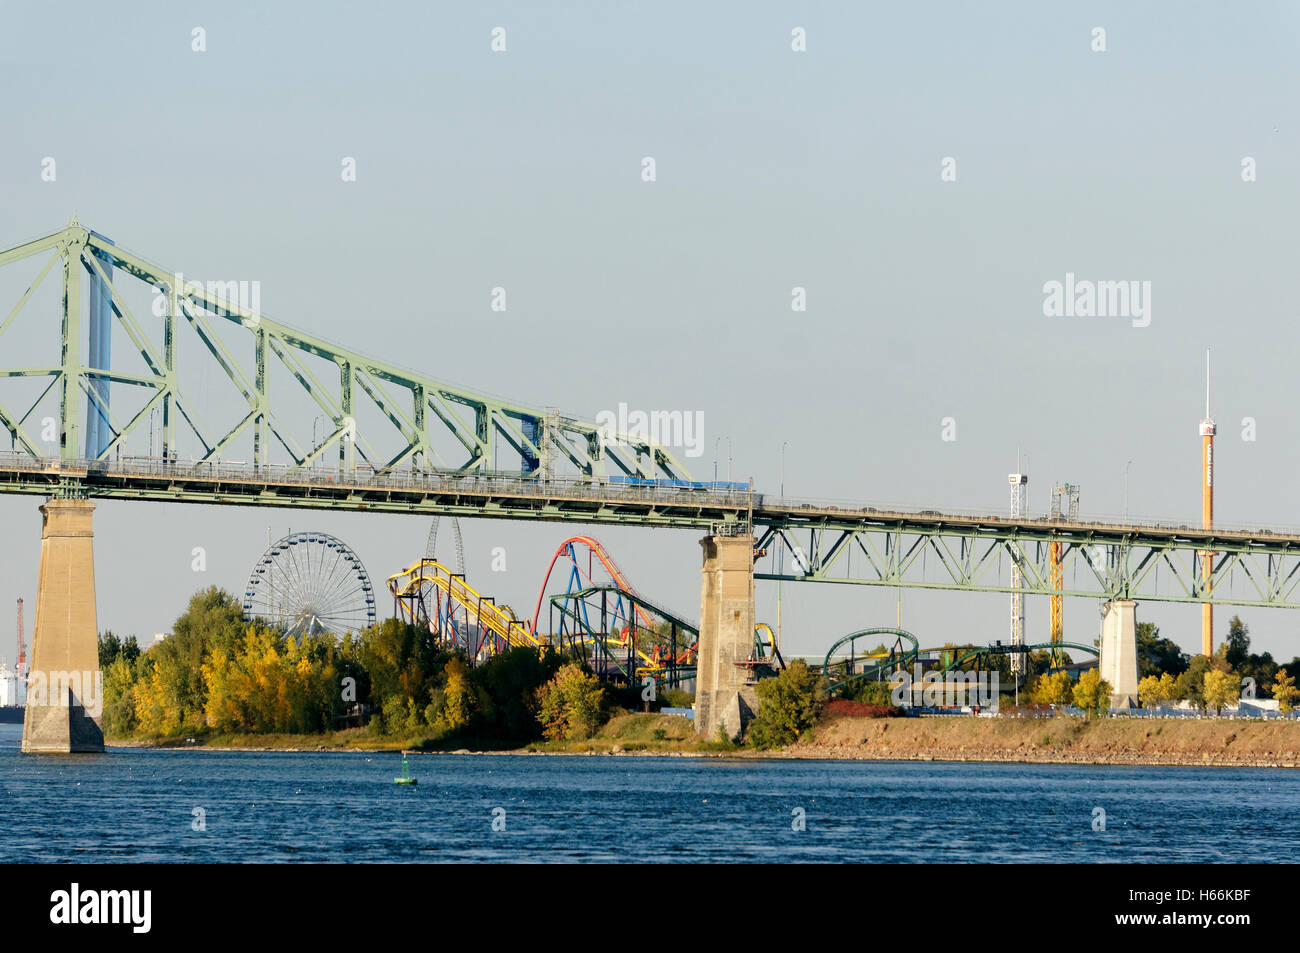 La Ronde amusement park on St. Helen's Island, Pont Jacques Cartier bridge and St. Lawrence River, Montreal, Quebec, Canada Stock Photo